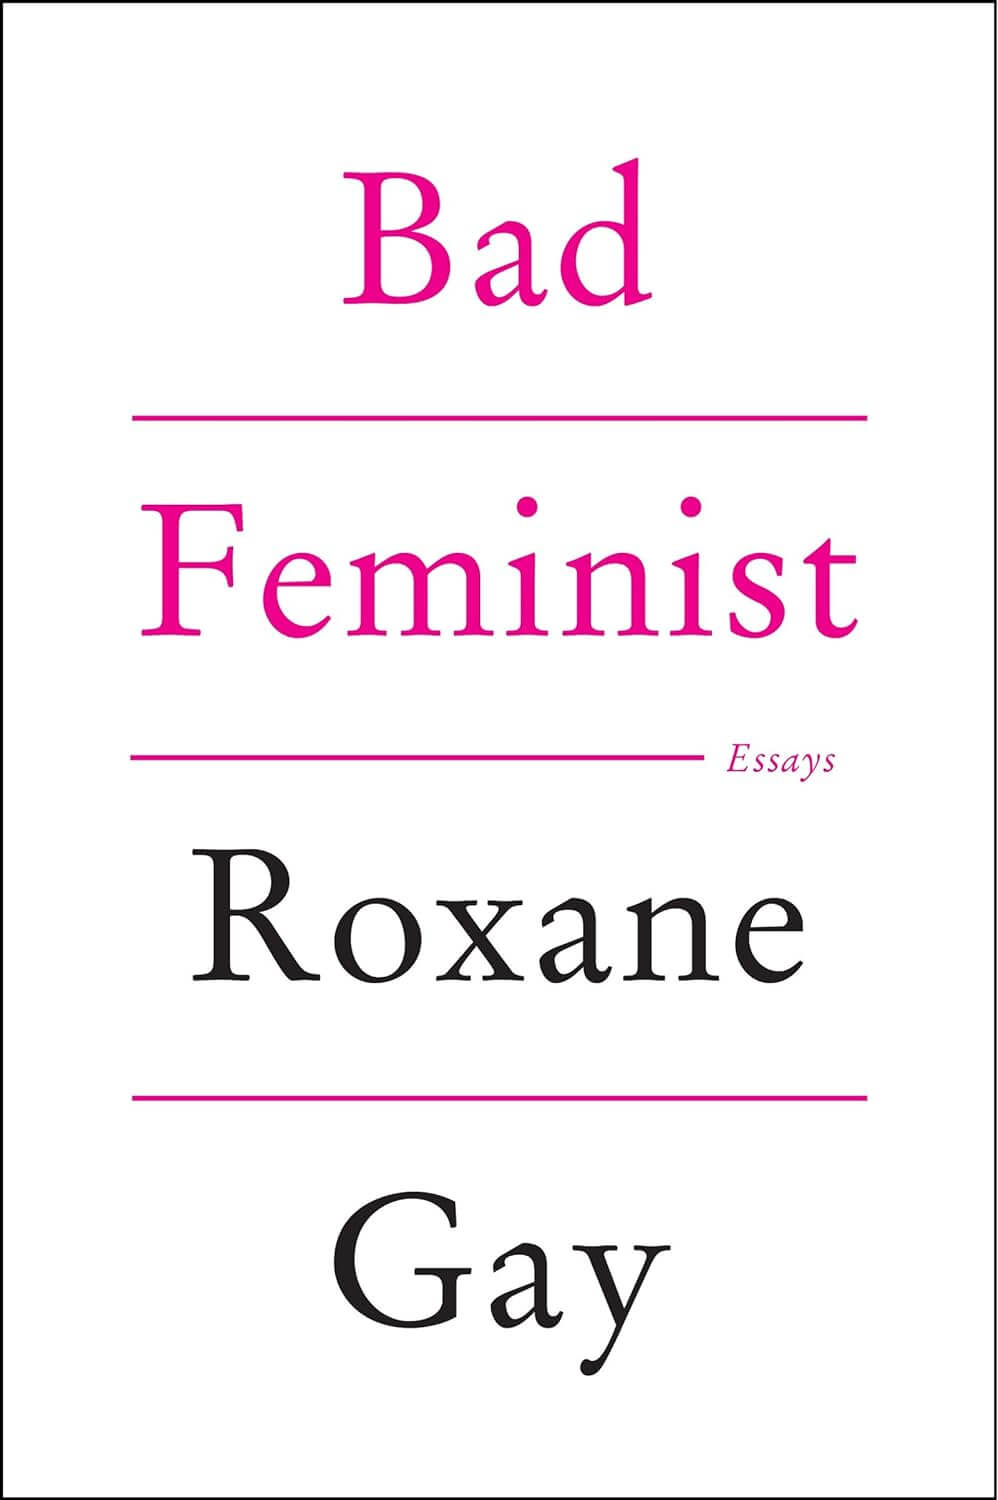 "Bad Feminist" by Roxane Gay